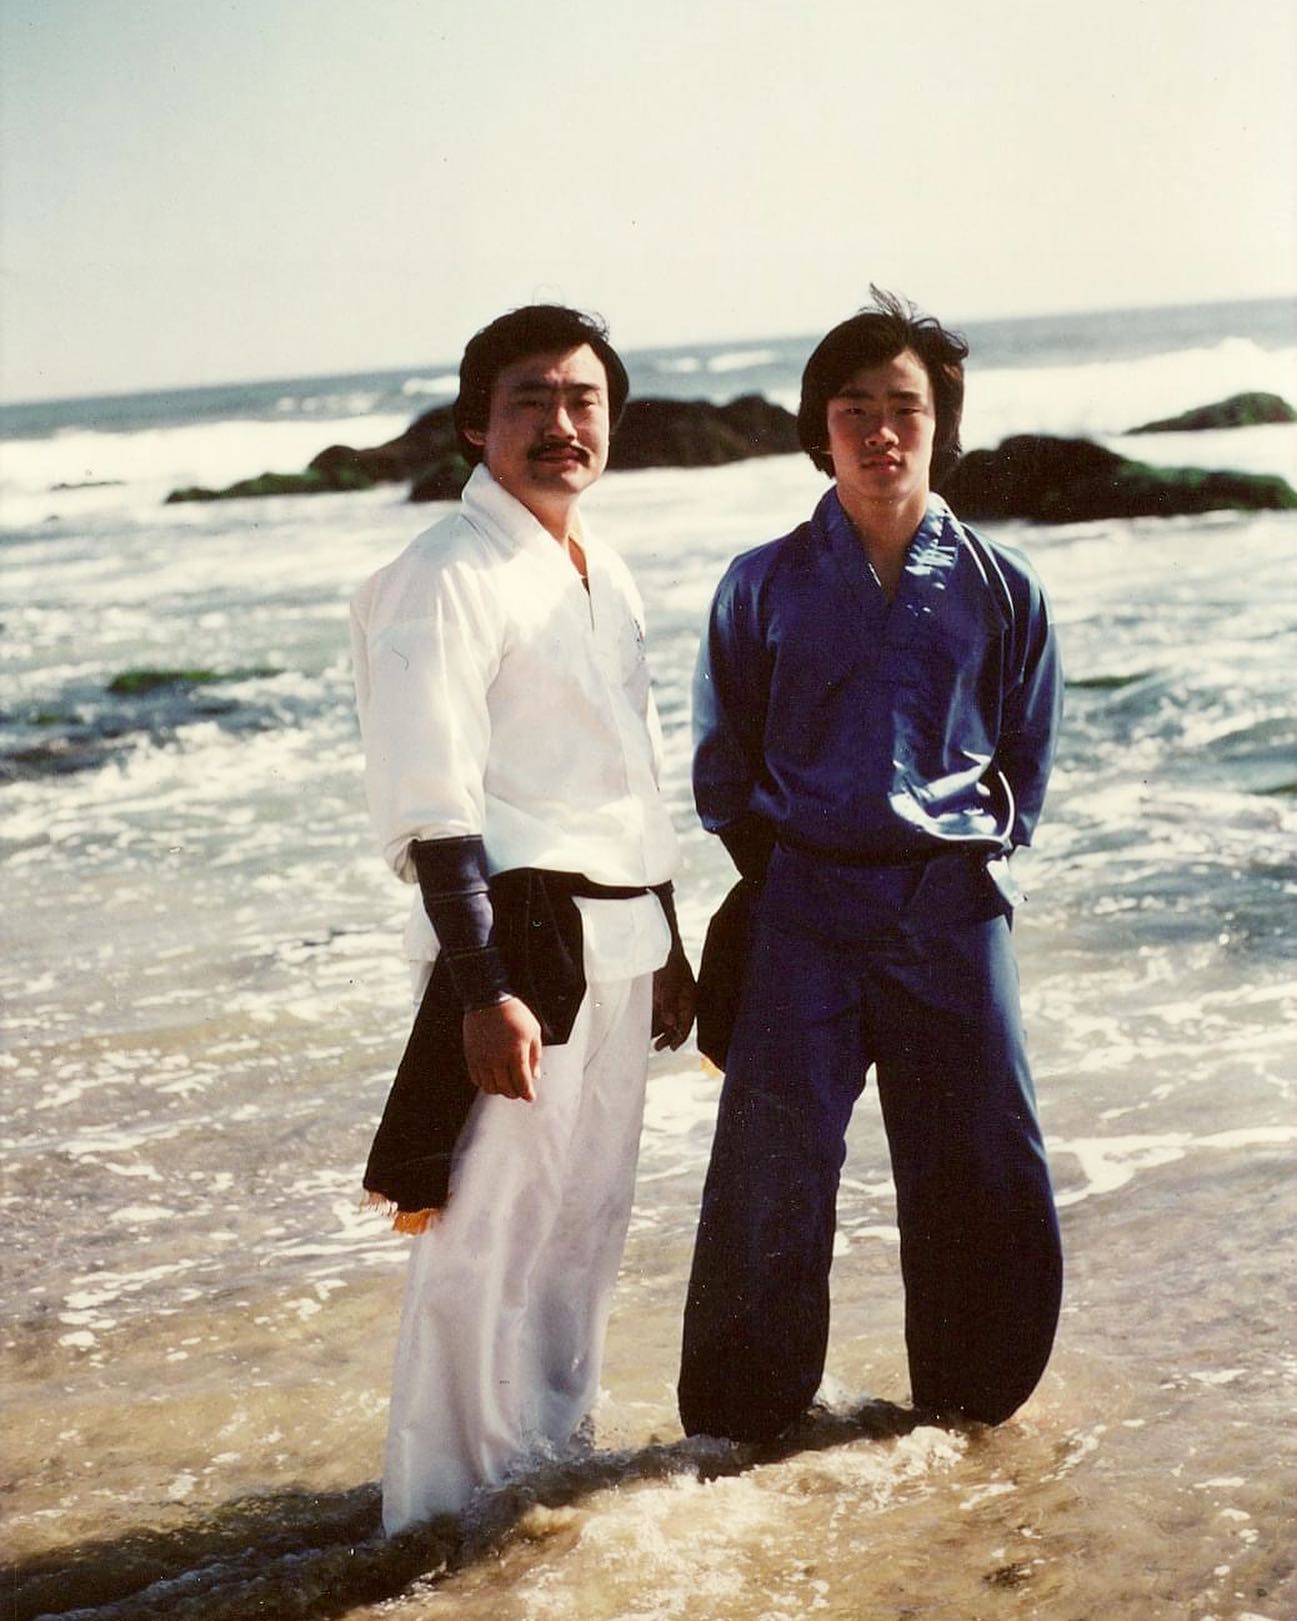 Dojoonim with his eldest son Grandmaster Taejoon Lee during an outdoors beach training and photo shoot #1980s

#dojoonim #joobanglee #hwarangdo #taesoodo #hwarang #photoshoot #beach #lagunabeach #history #fatherandson #taejoonlee #화랑 #화랑도 #도주 #이주방 #이태준